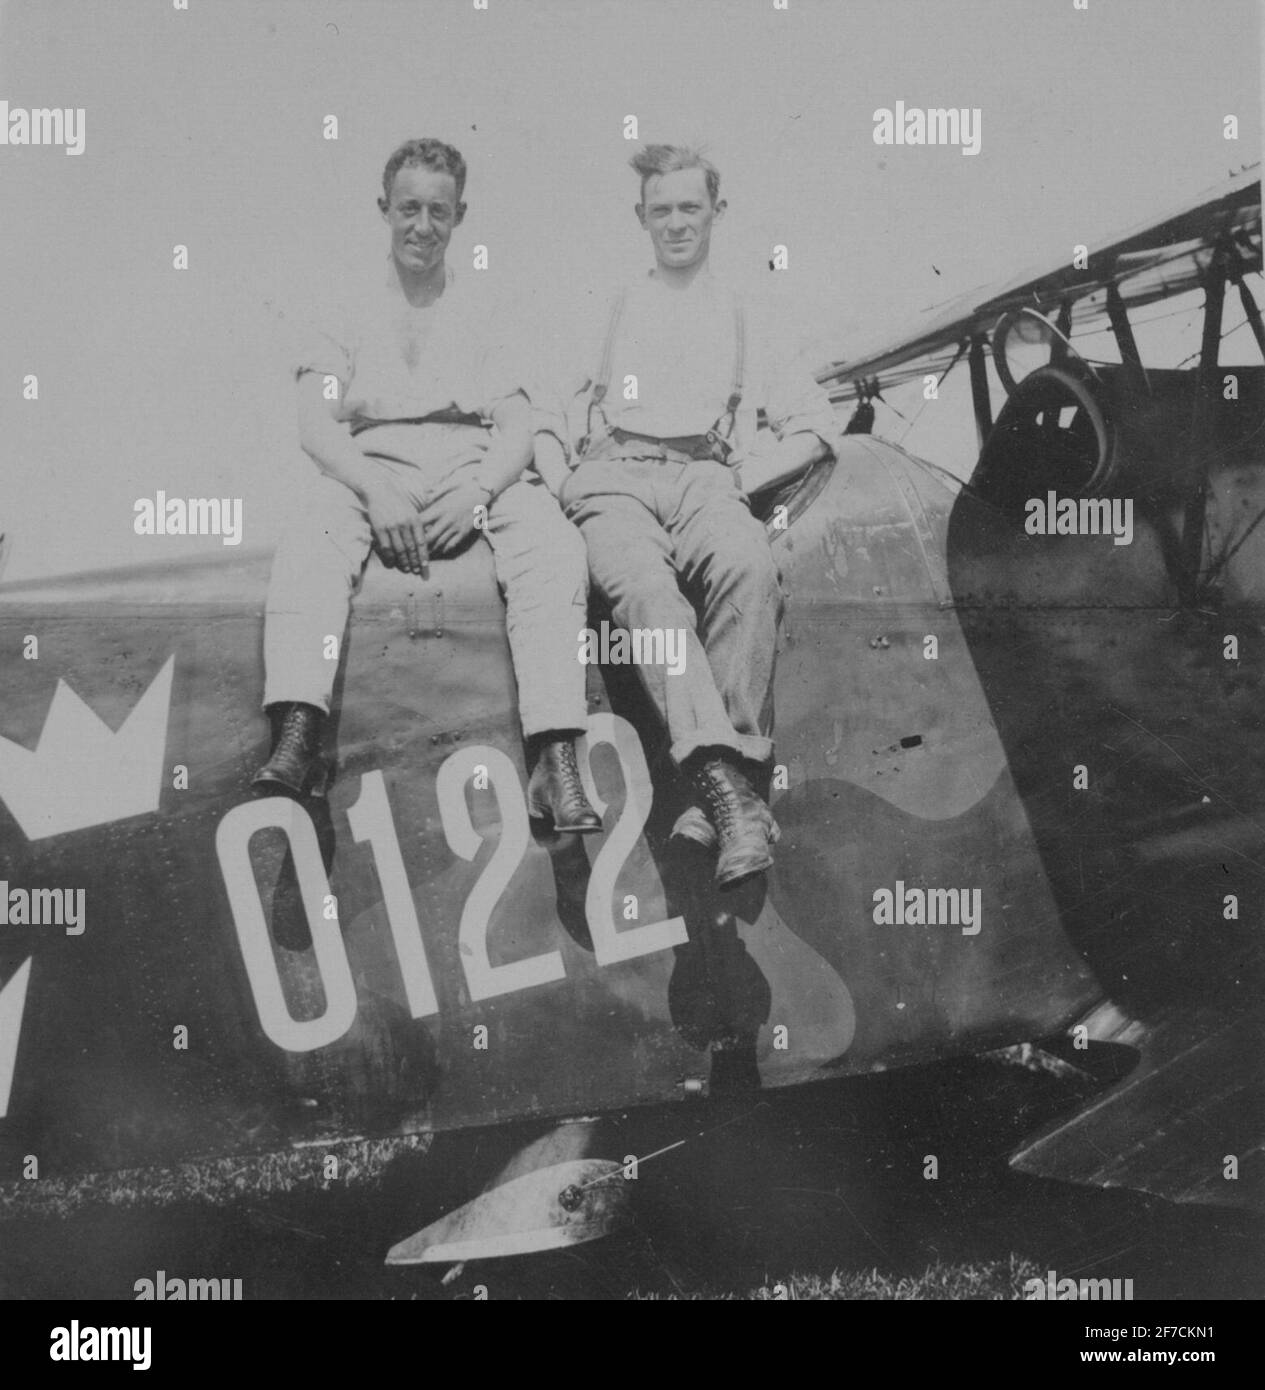 Two men on airplane Phönix E 1 Dropt motif: Two men sit above the driver's sitting on the airplane Phönix E 1 Dront number 122. Stock Photo